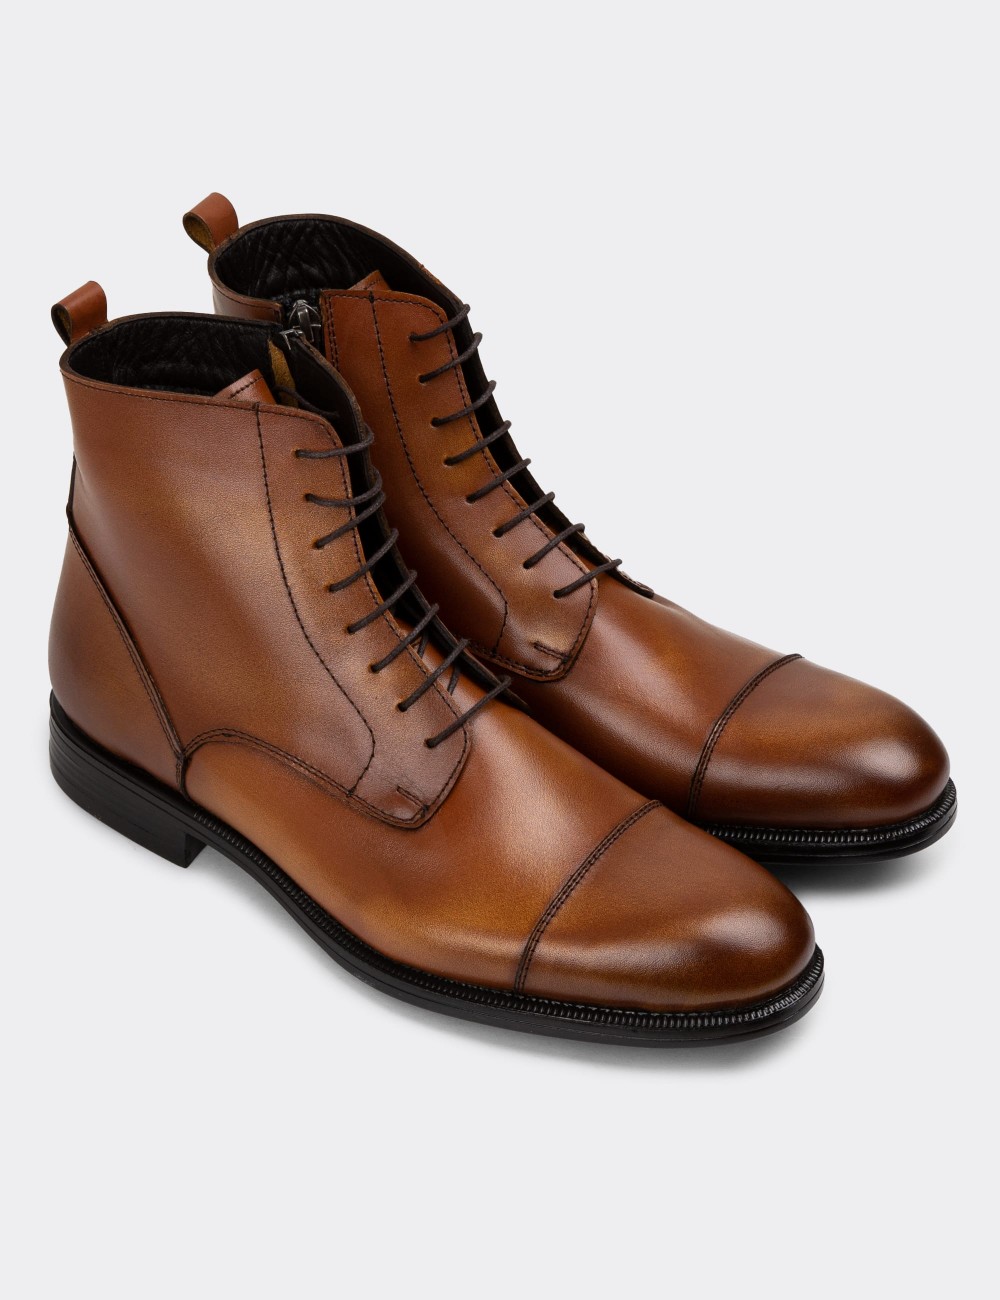 Tan Leather Boots - 01974MTBAC01